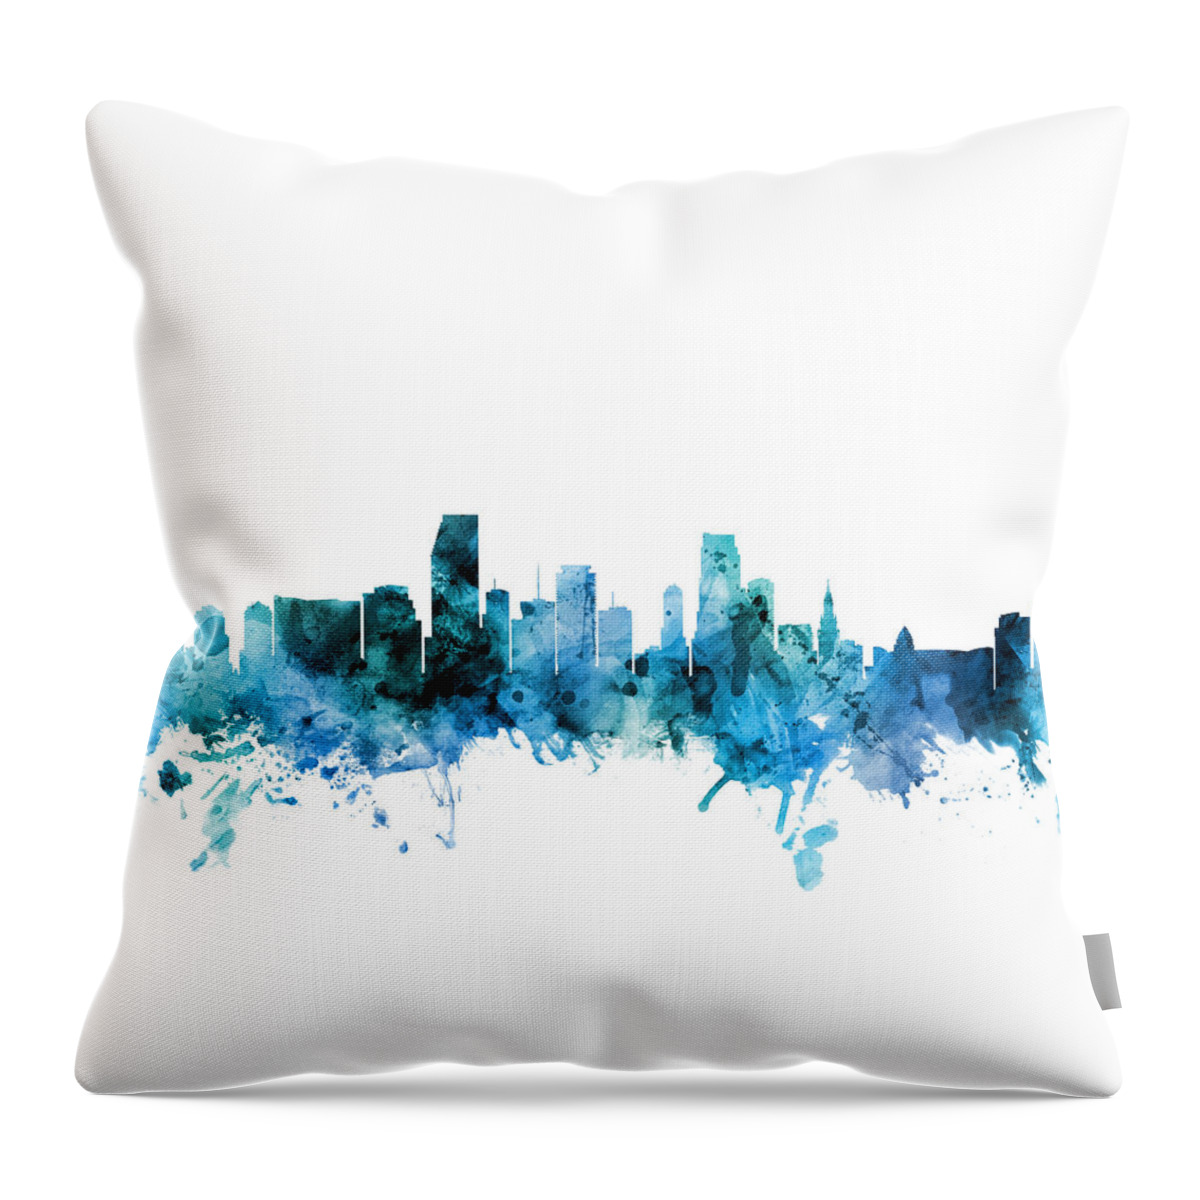 Miami Throw Pillow featuring the digital art Miami Florida Skyline by Michael Tompsett